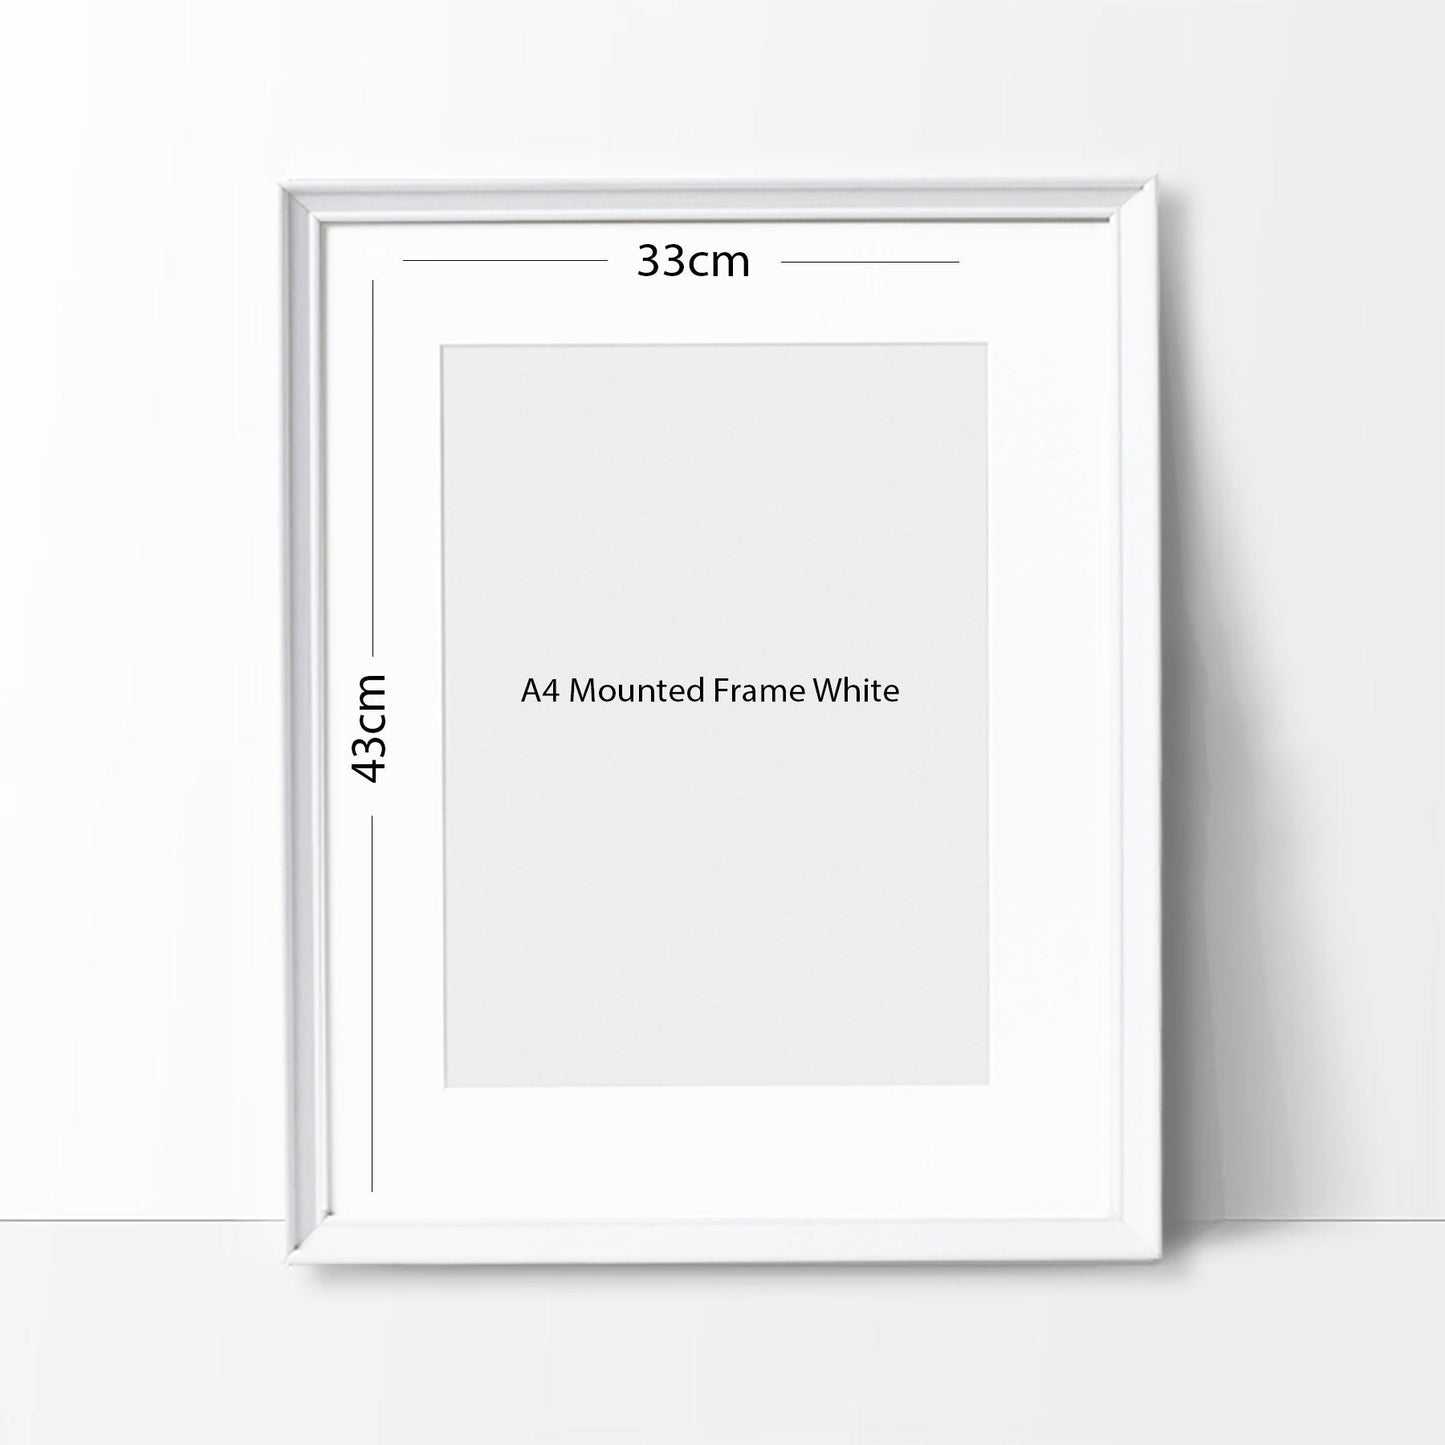 Classic Schmeichel Artwork | Minimalist Art Print Poster Gift Idea For Him | Football Print | Soccer | Gift for Husband Boyfriend